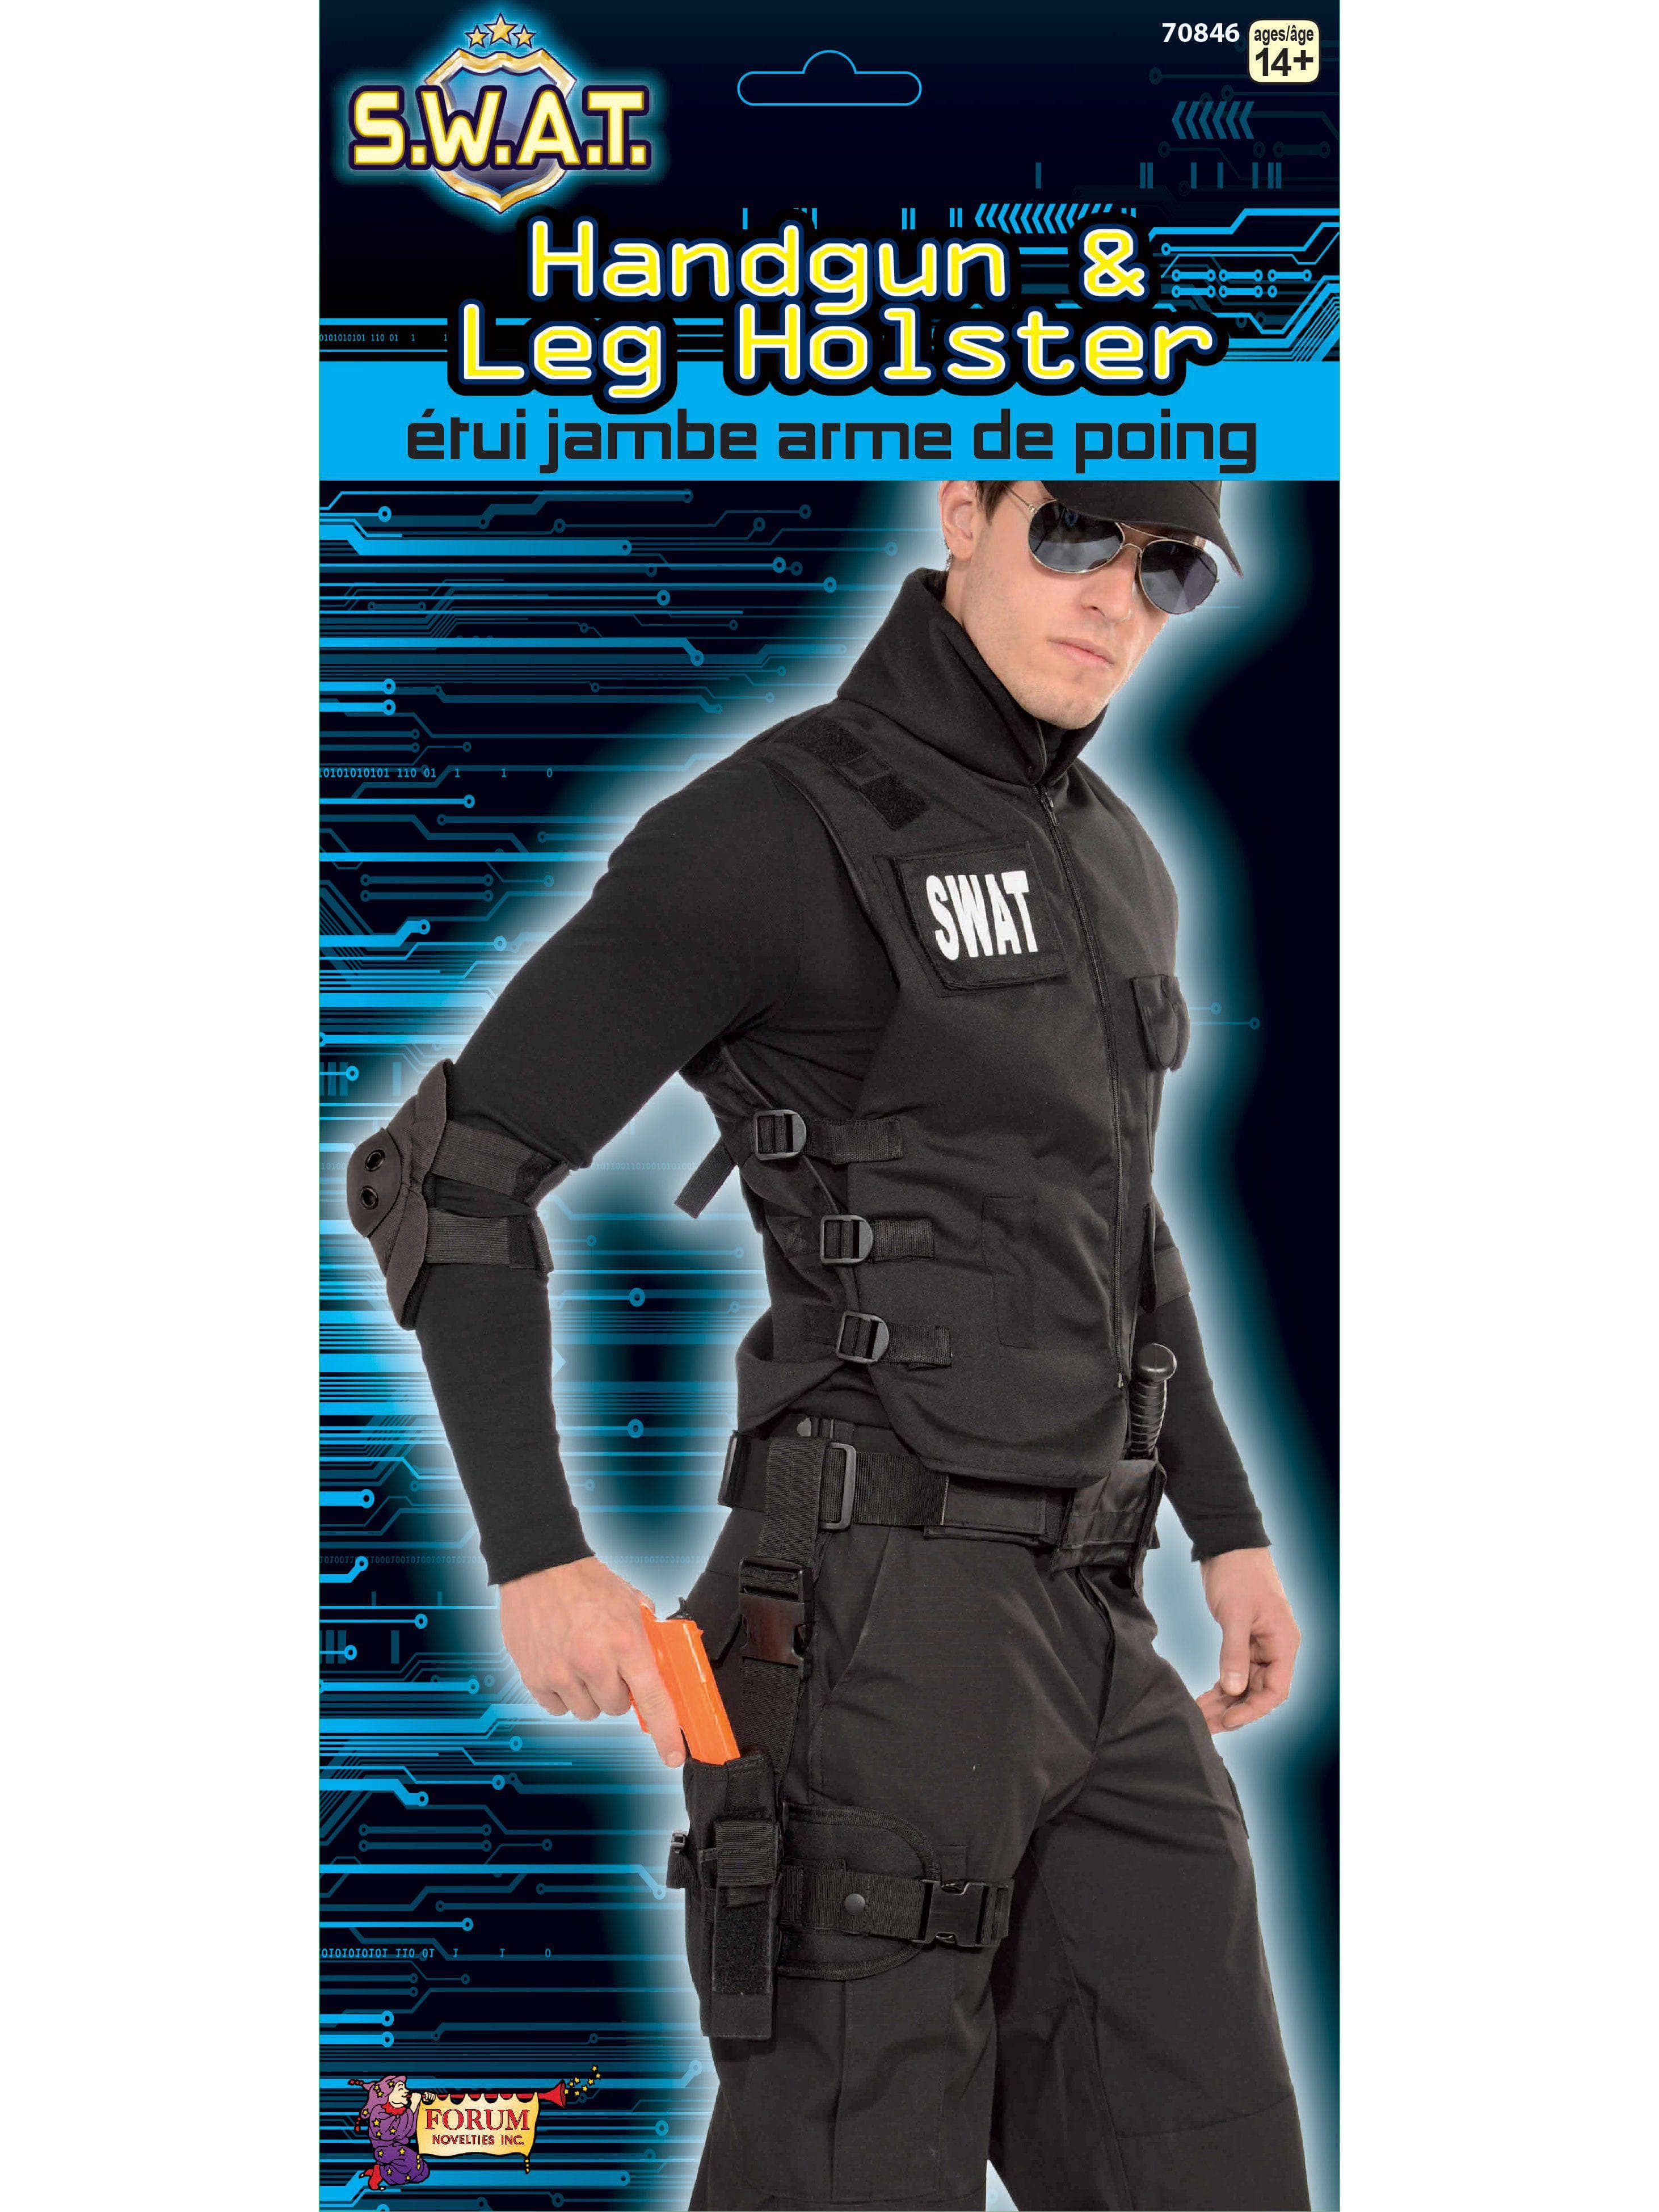 Adult Leg Holster and Gun - costumes.com